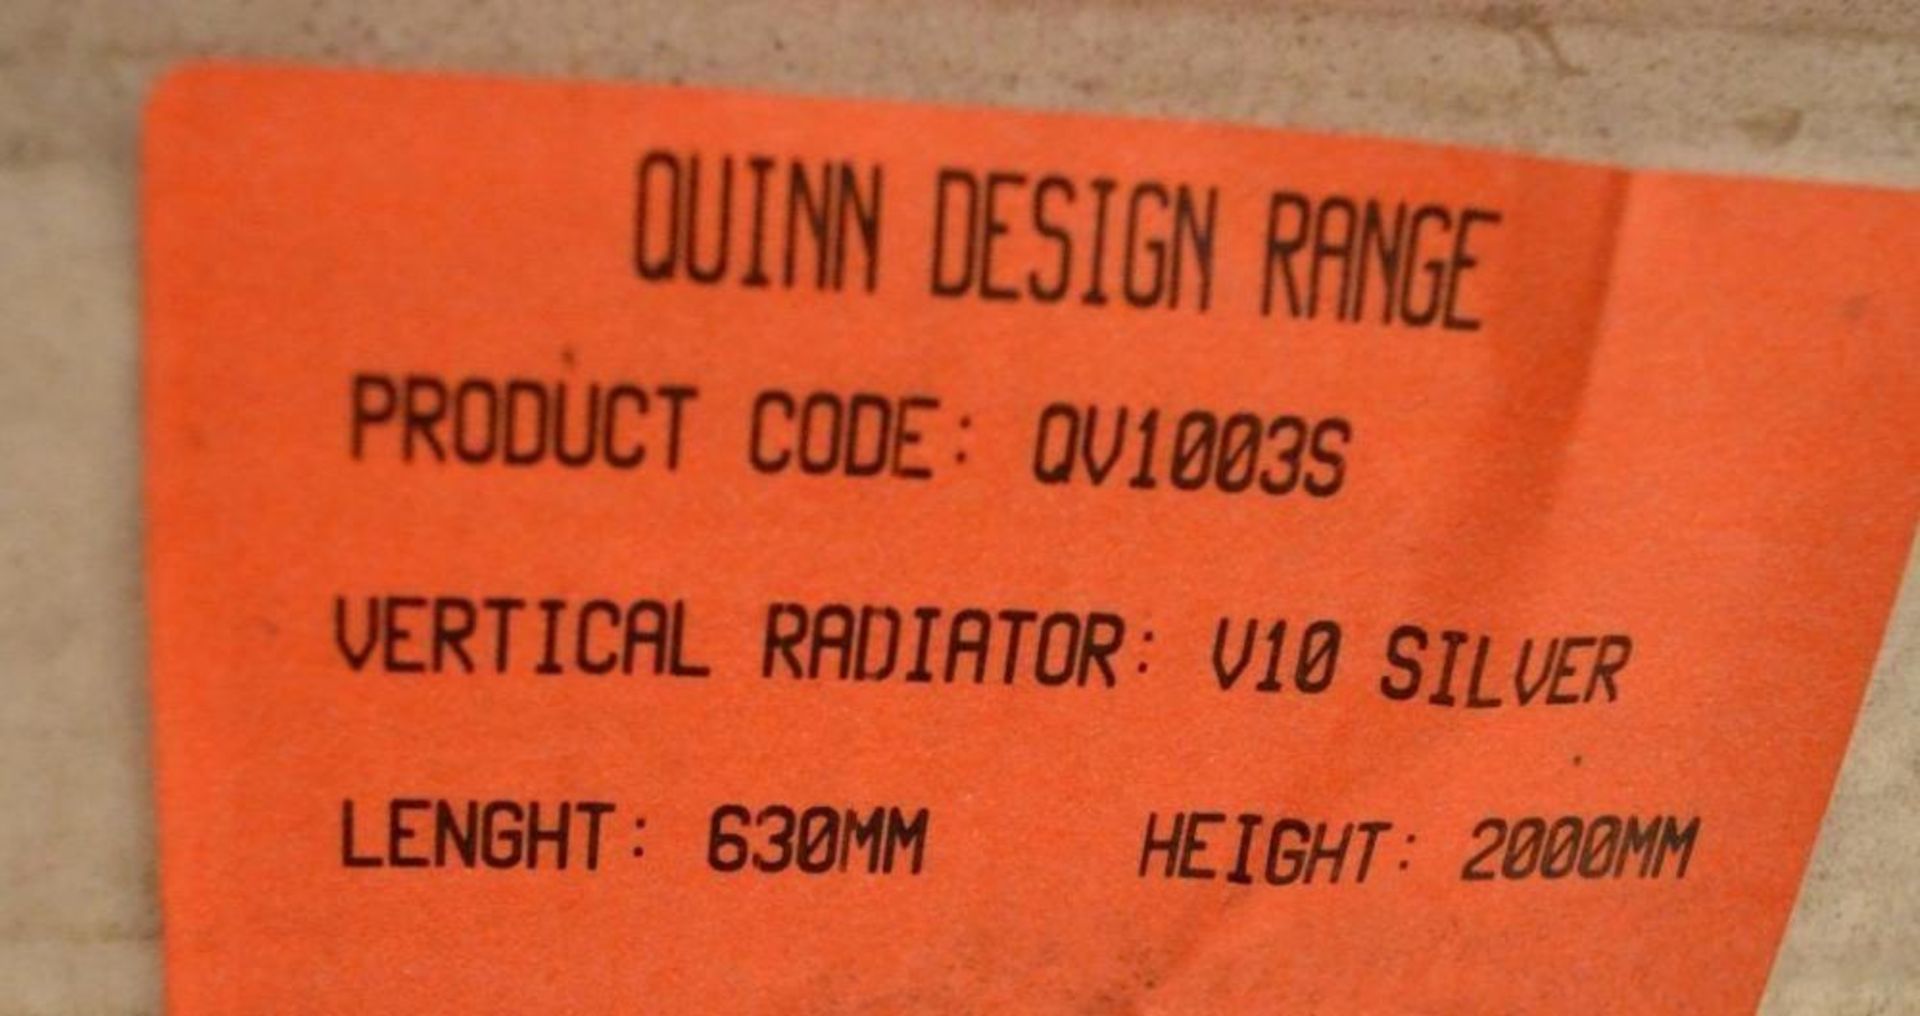 1 x Quinn Slieve Designer Single Panel Vertical Radiator in Matt Silver - Contemporary Design - Will - Image 4 of 5